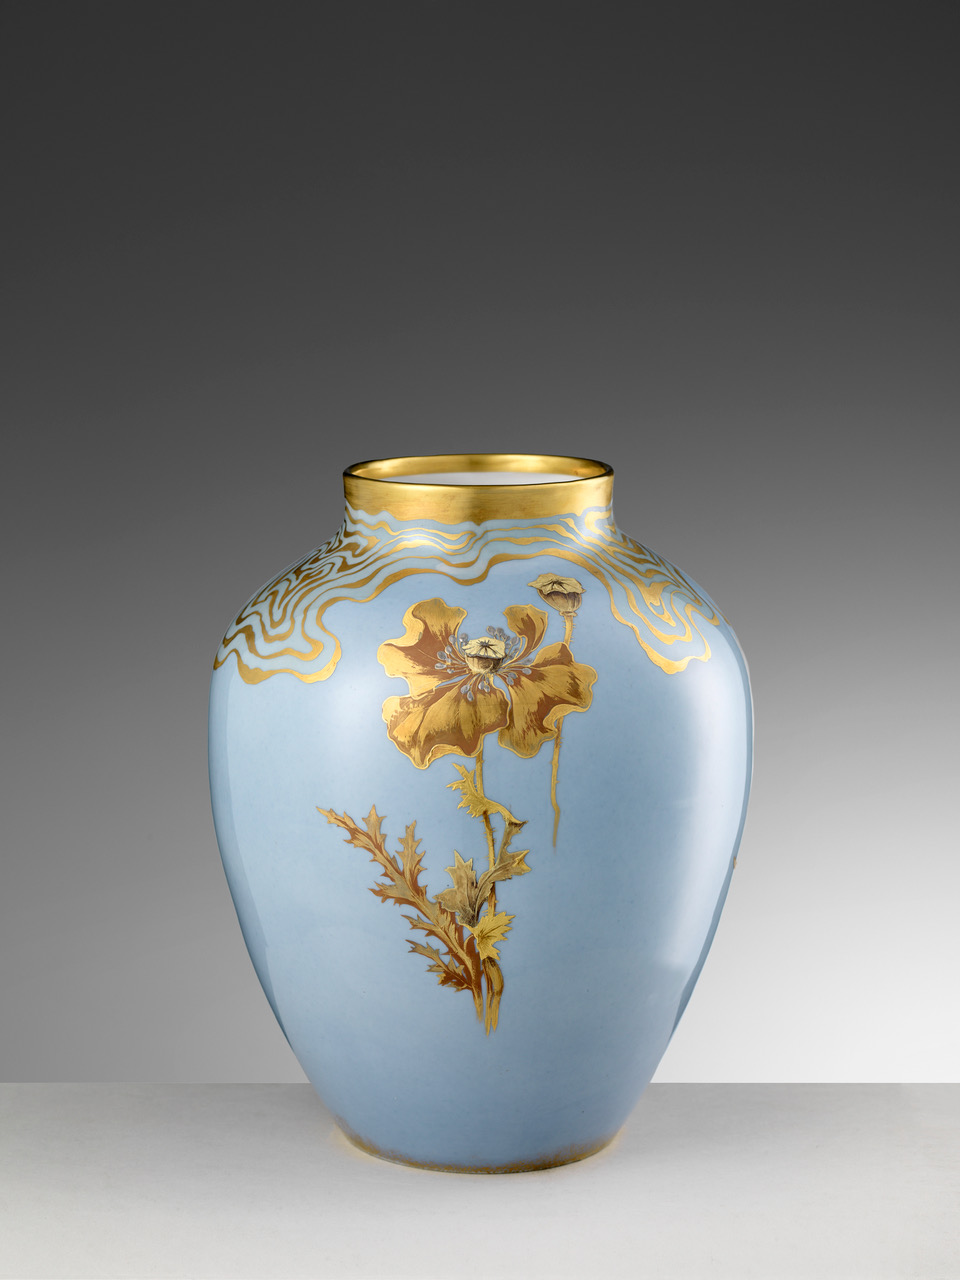 Richard-Ginori, Vaso con papaveri, porcellana, 1902 circa, Museo Ginori